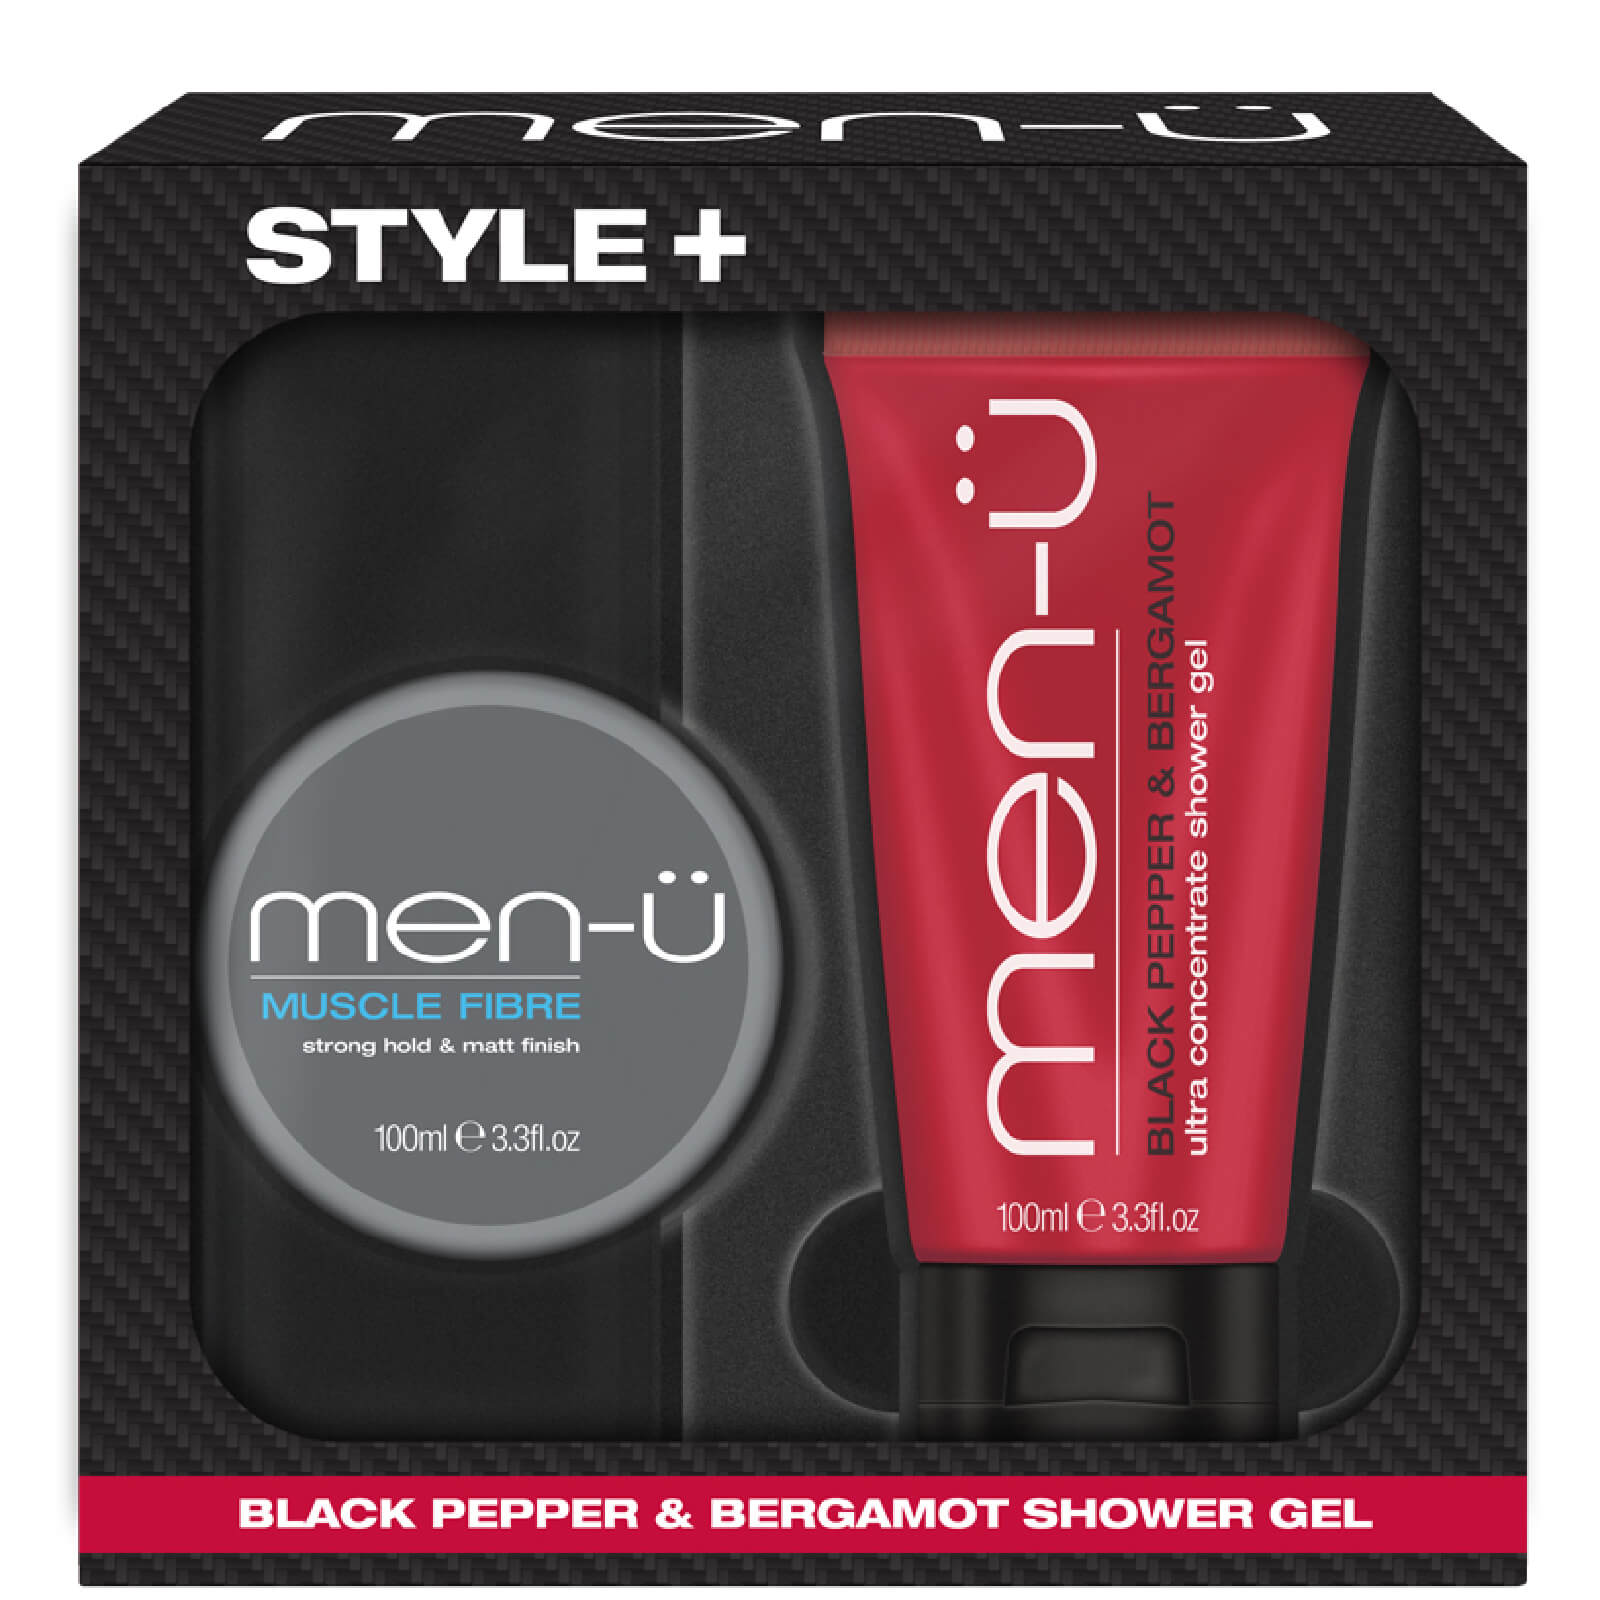 men-u Style+ Black Pepper & Bergamot Shower Gel 100ml - Muscle Fibre